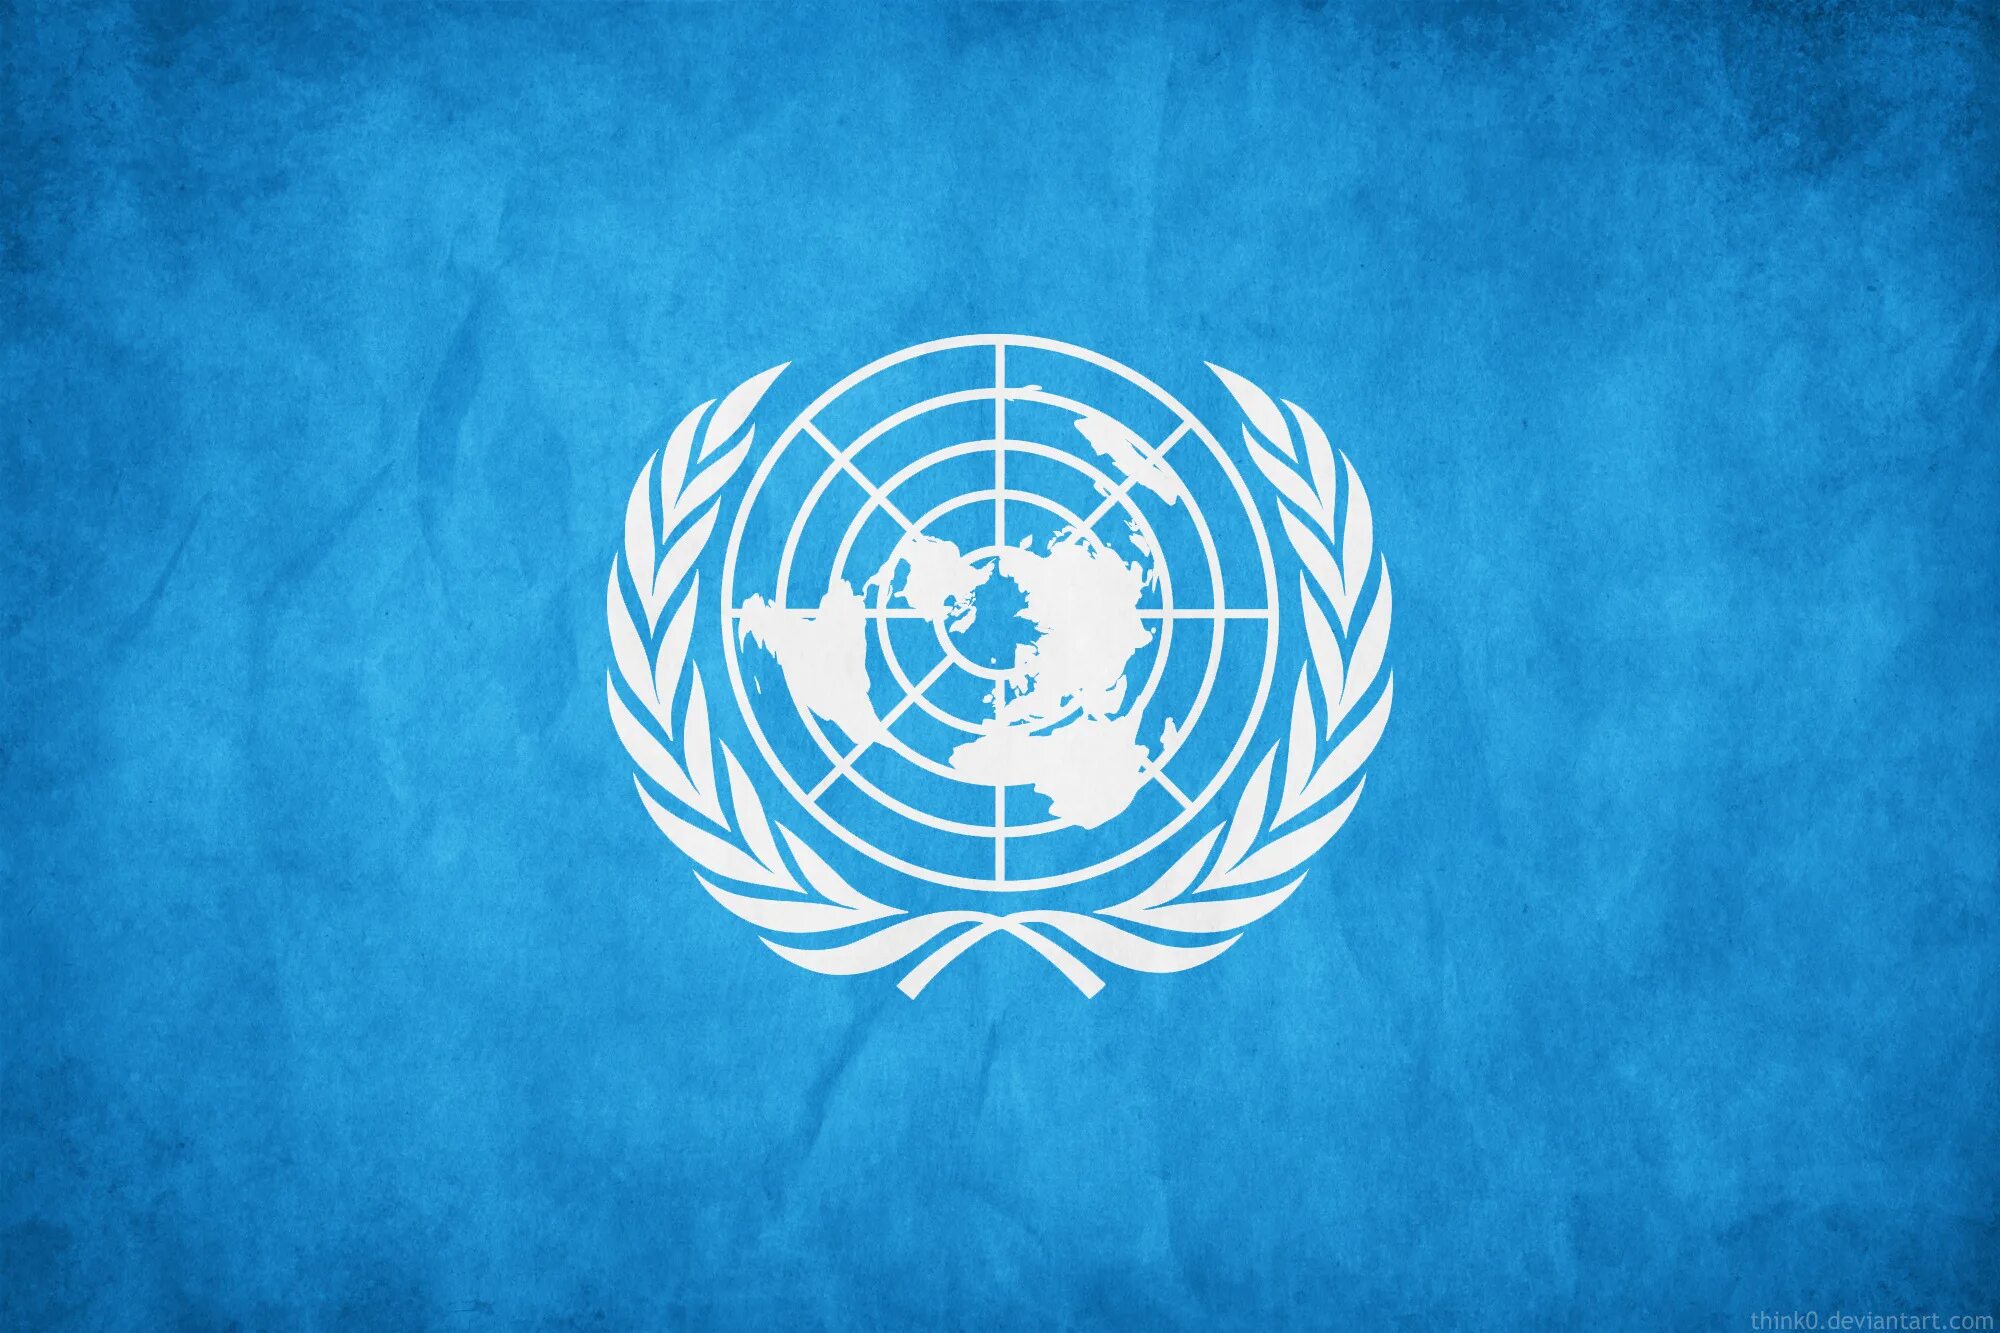 Рабочие оон. Флаг миротворческих сил ООН. Организация Объединенных наций (ООН). Флаг организации Объединенных наций. Организация Объединенных наций ООН флаг.